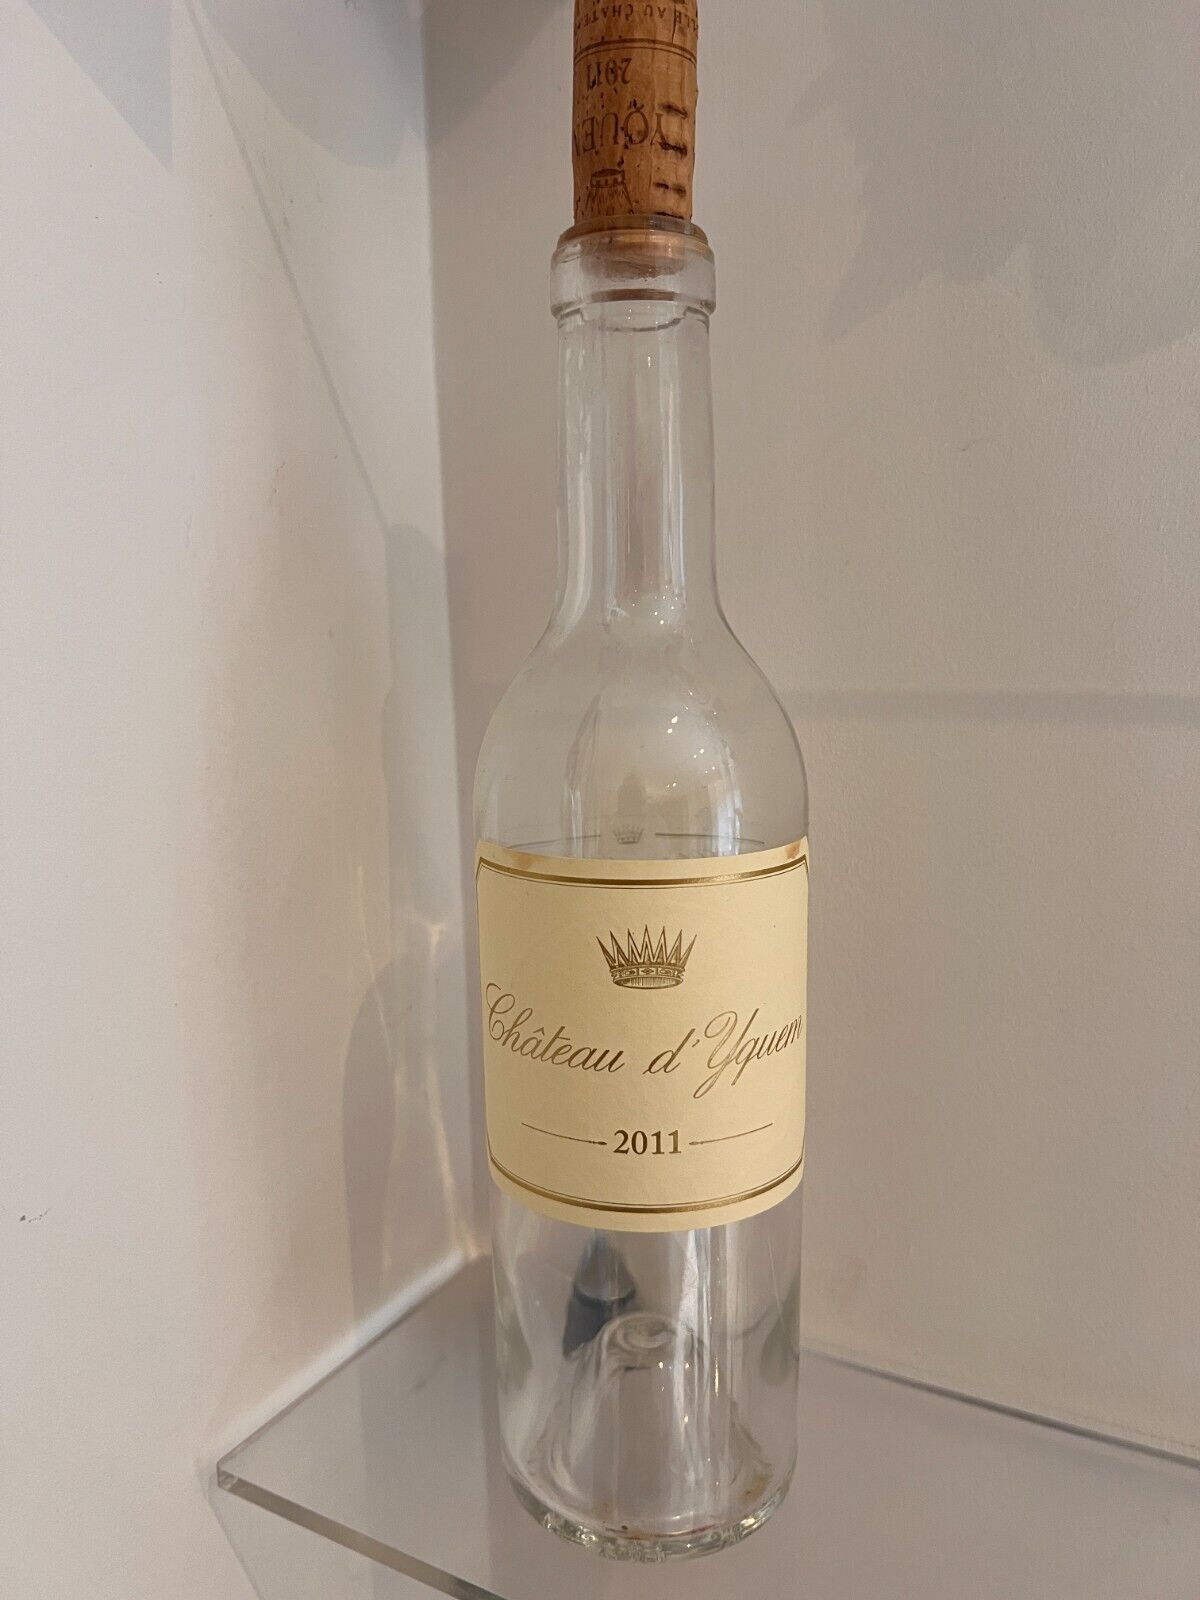 Chateau D\'Yquem 2011 Wine bottle 1/2 bottle size #2 with cork